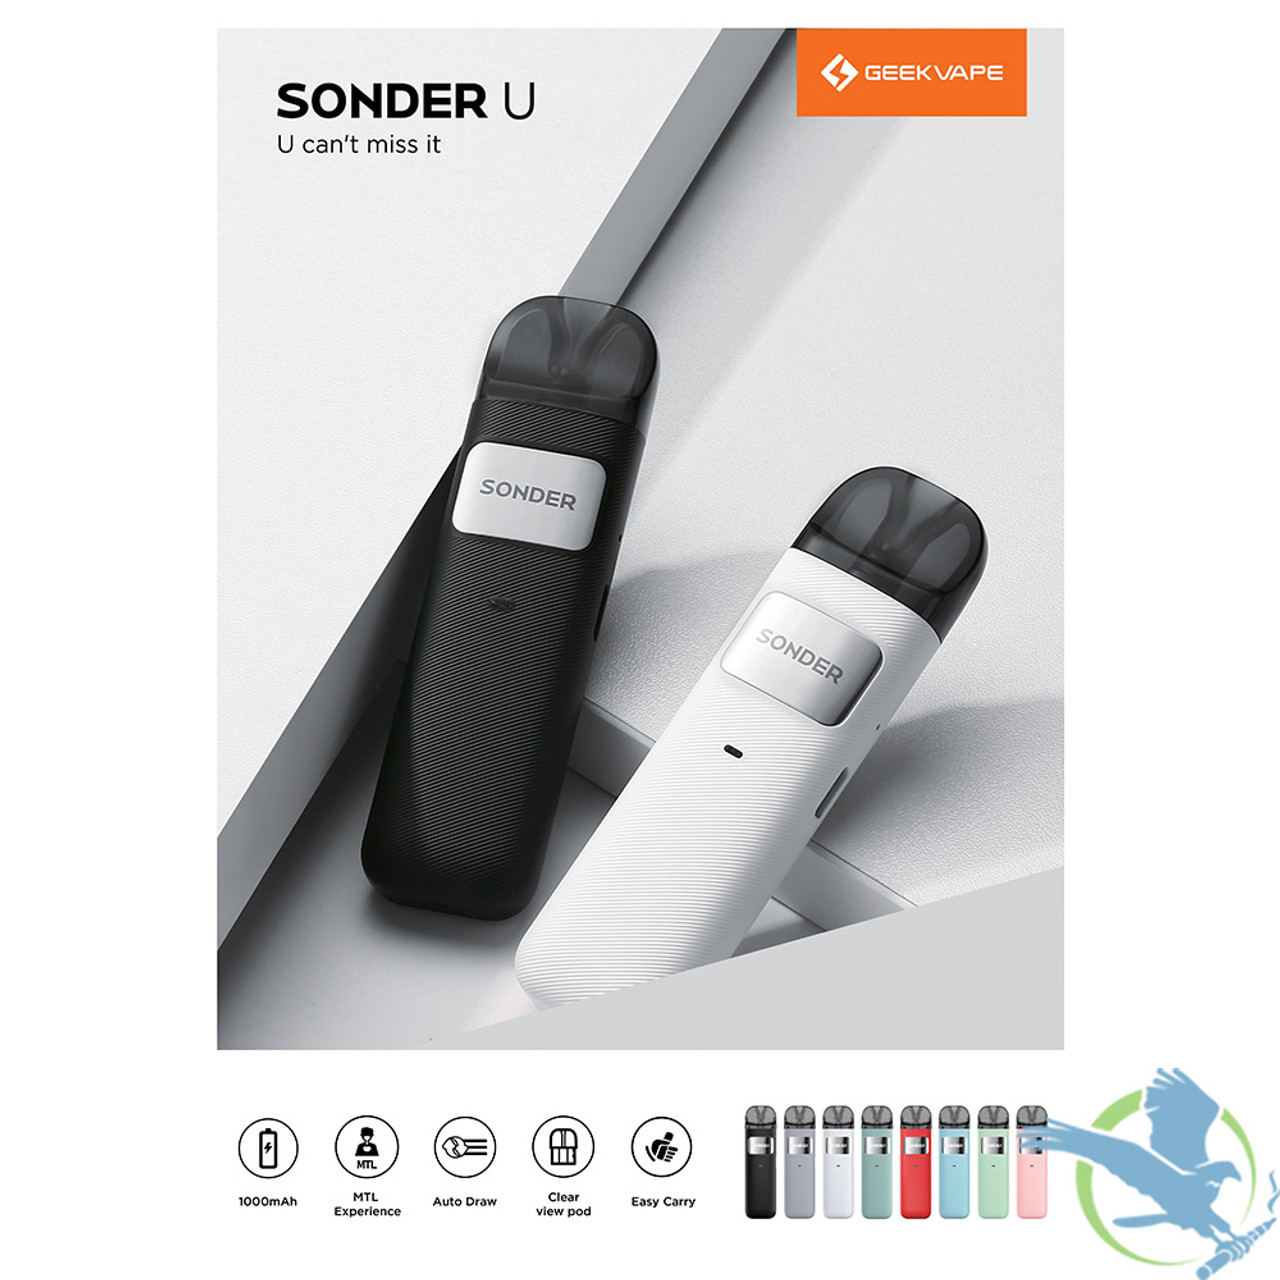 GeekVape Sonder U 1000mAh Pod System Starter Kit With Refillable